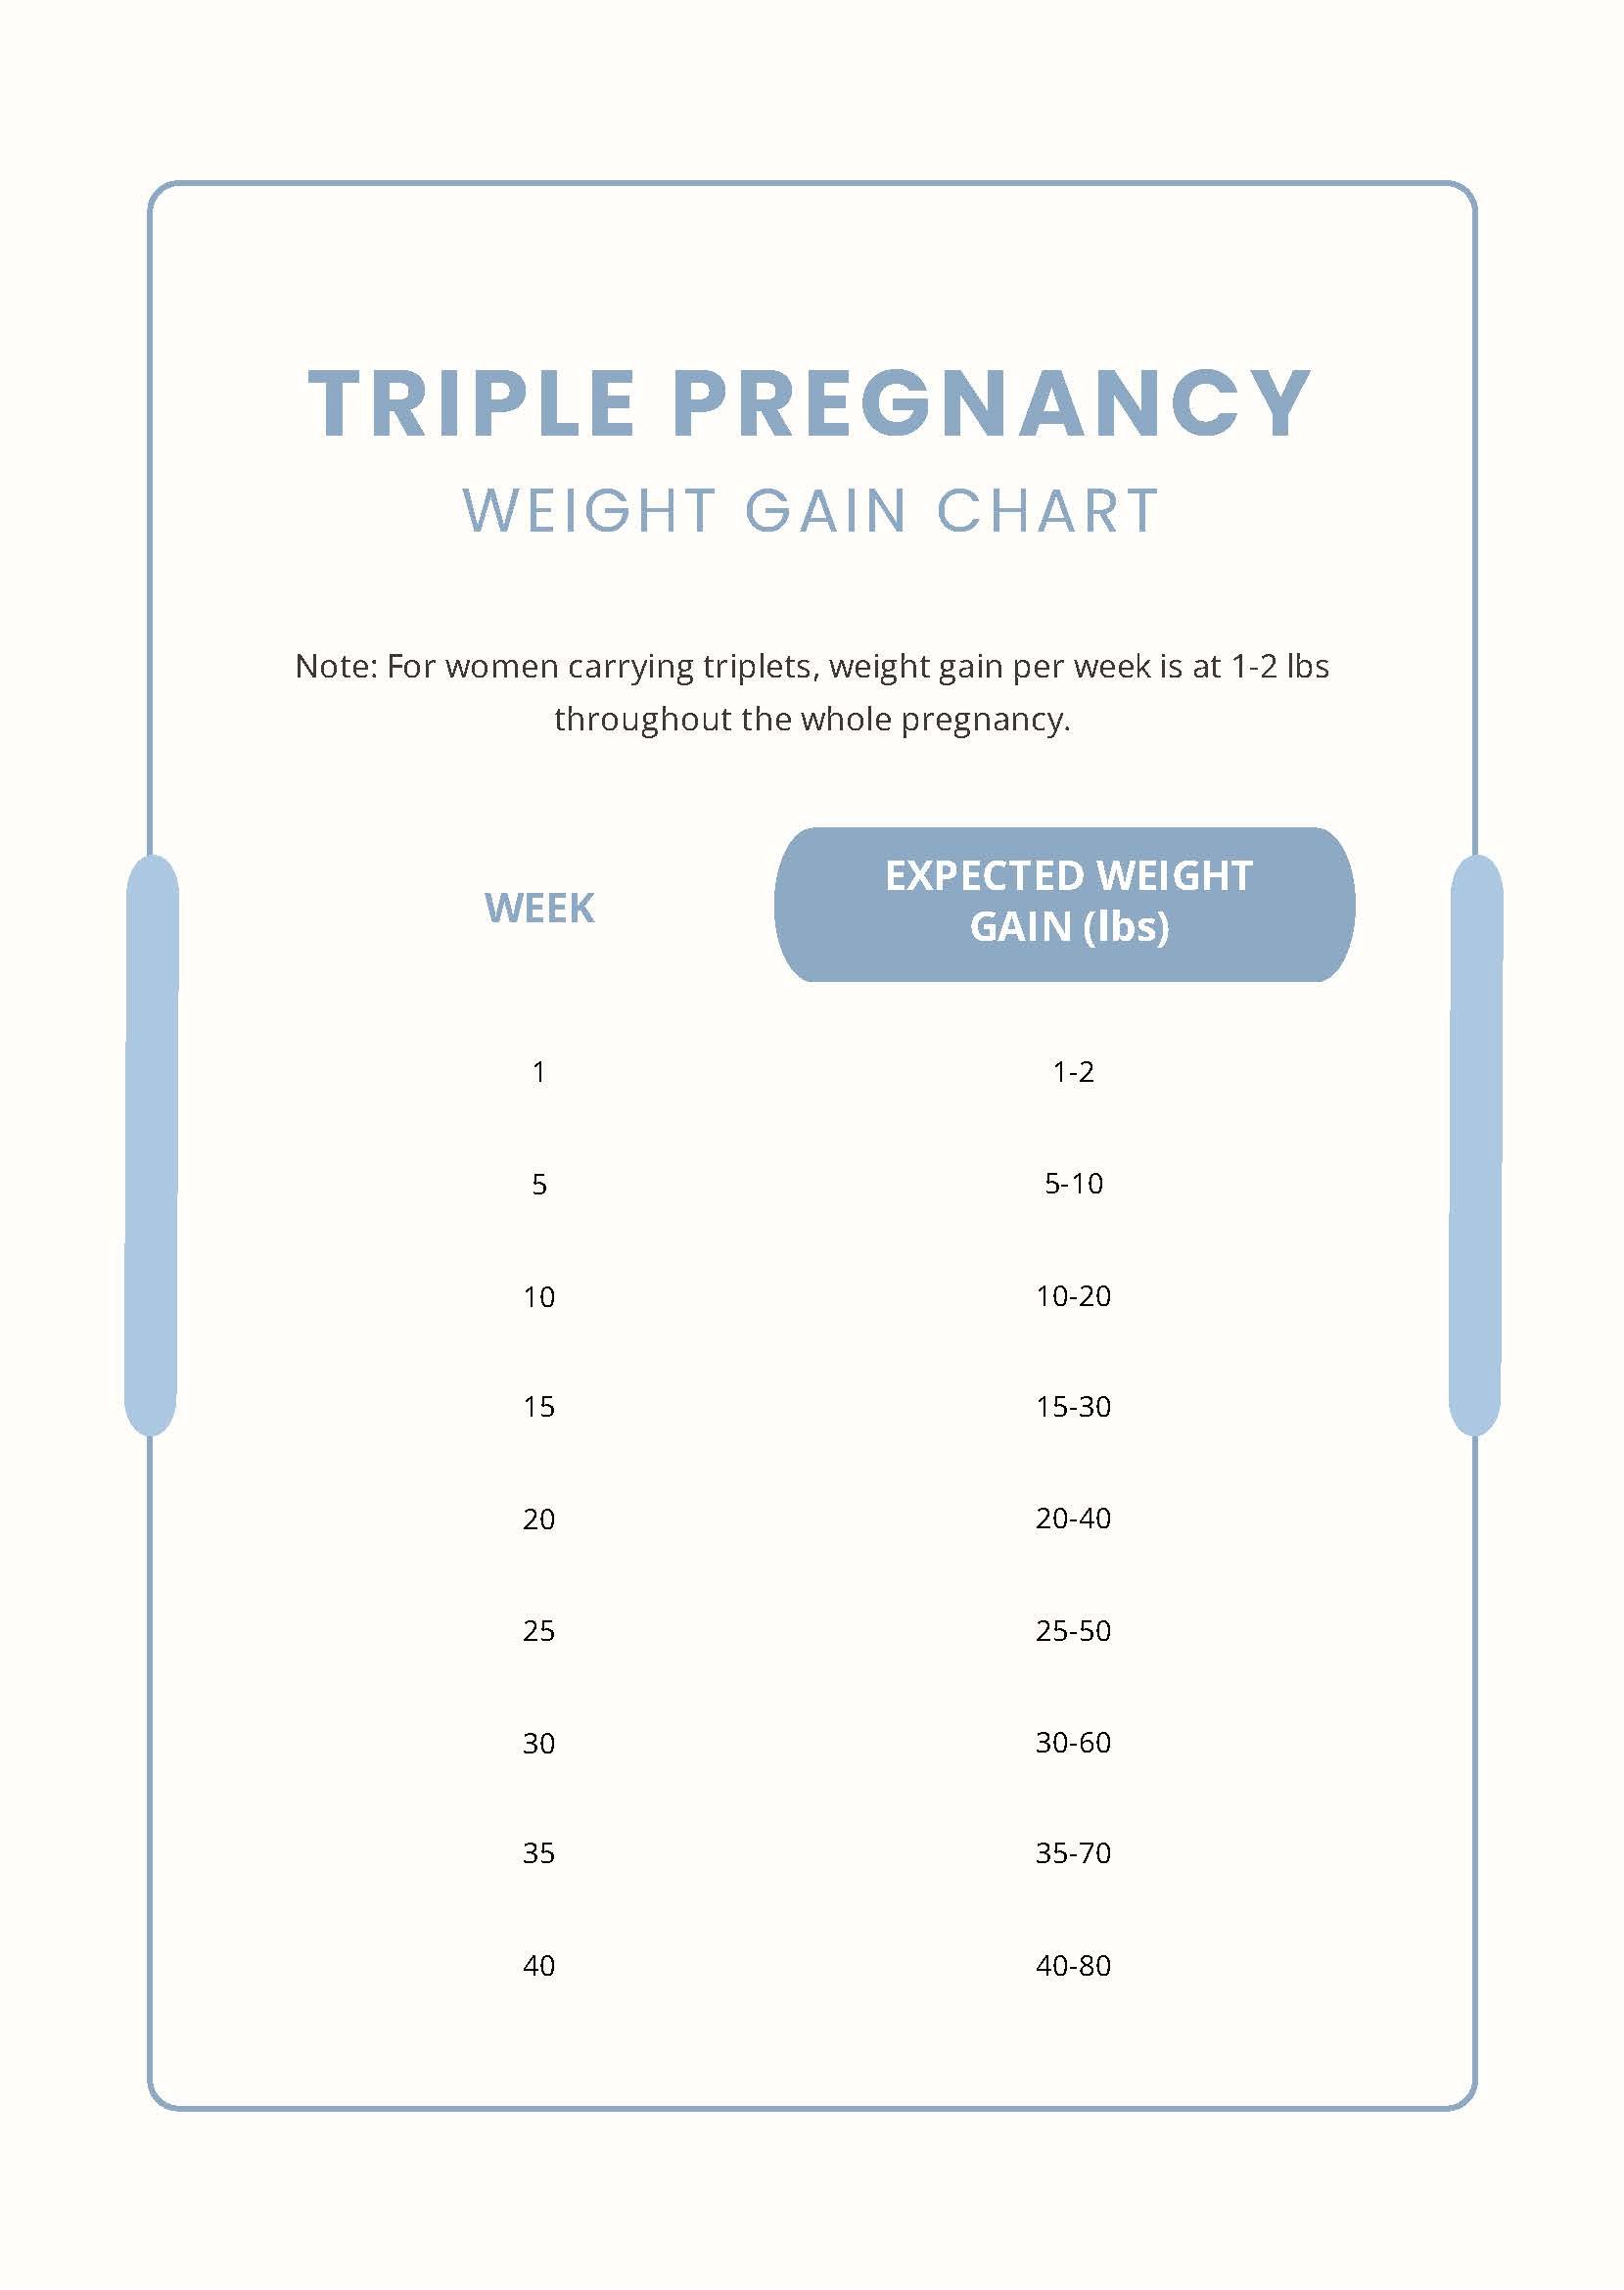 Triplet Pregnancy Weight Gain Chart in PDF